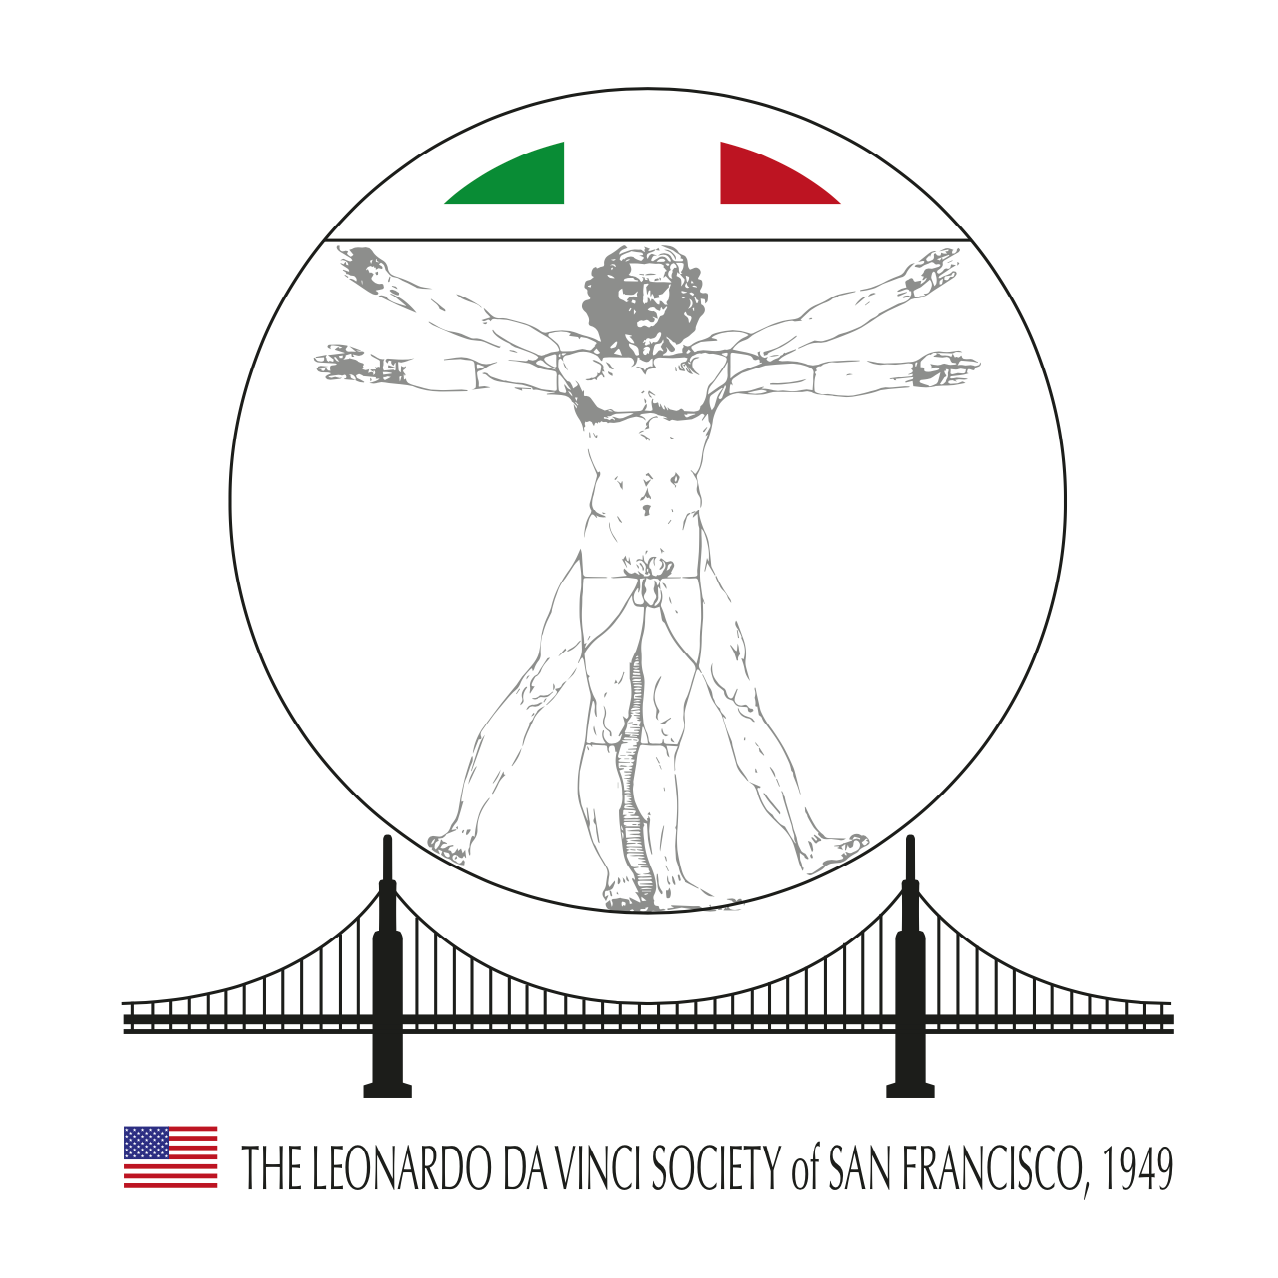 Italian Organization in California - The Leonardo da Vinci Society